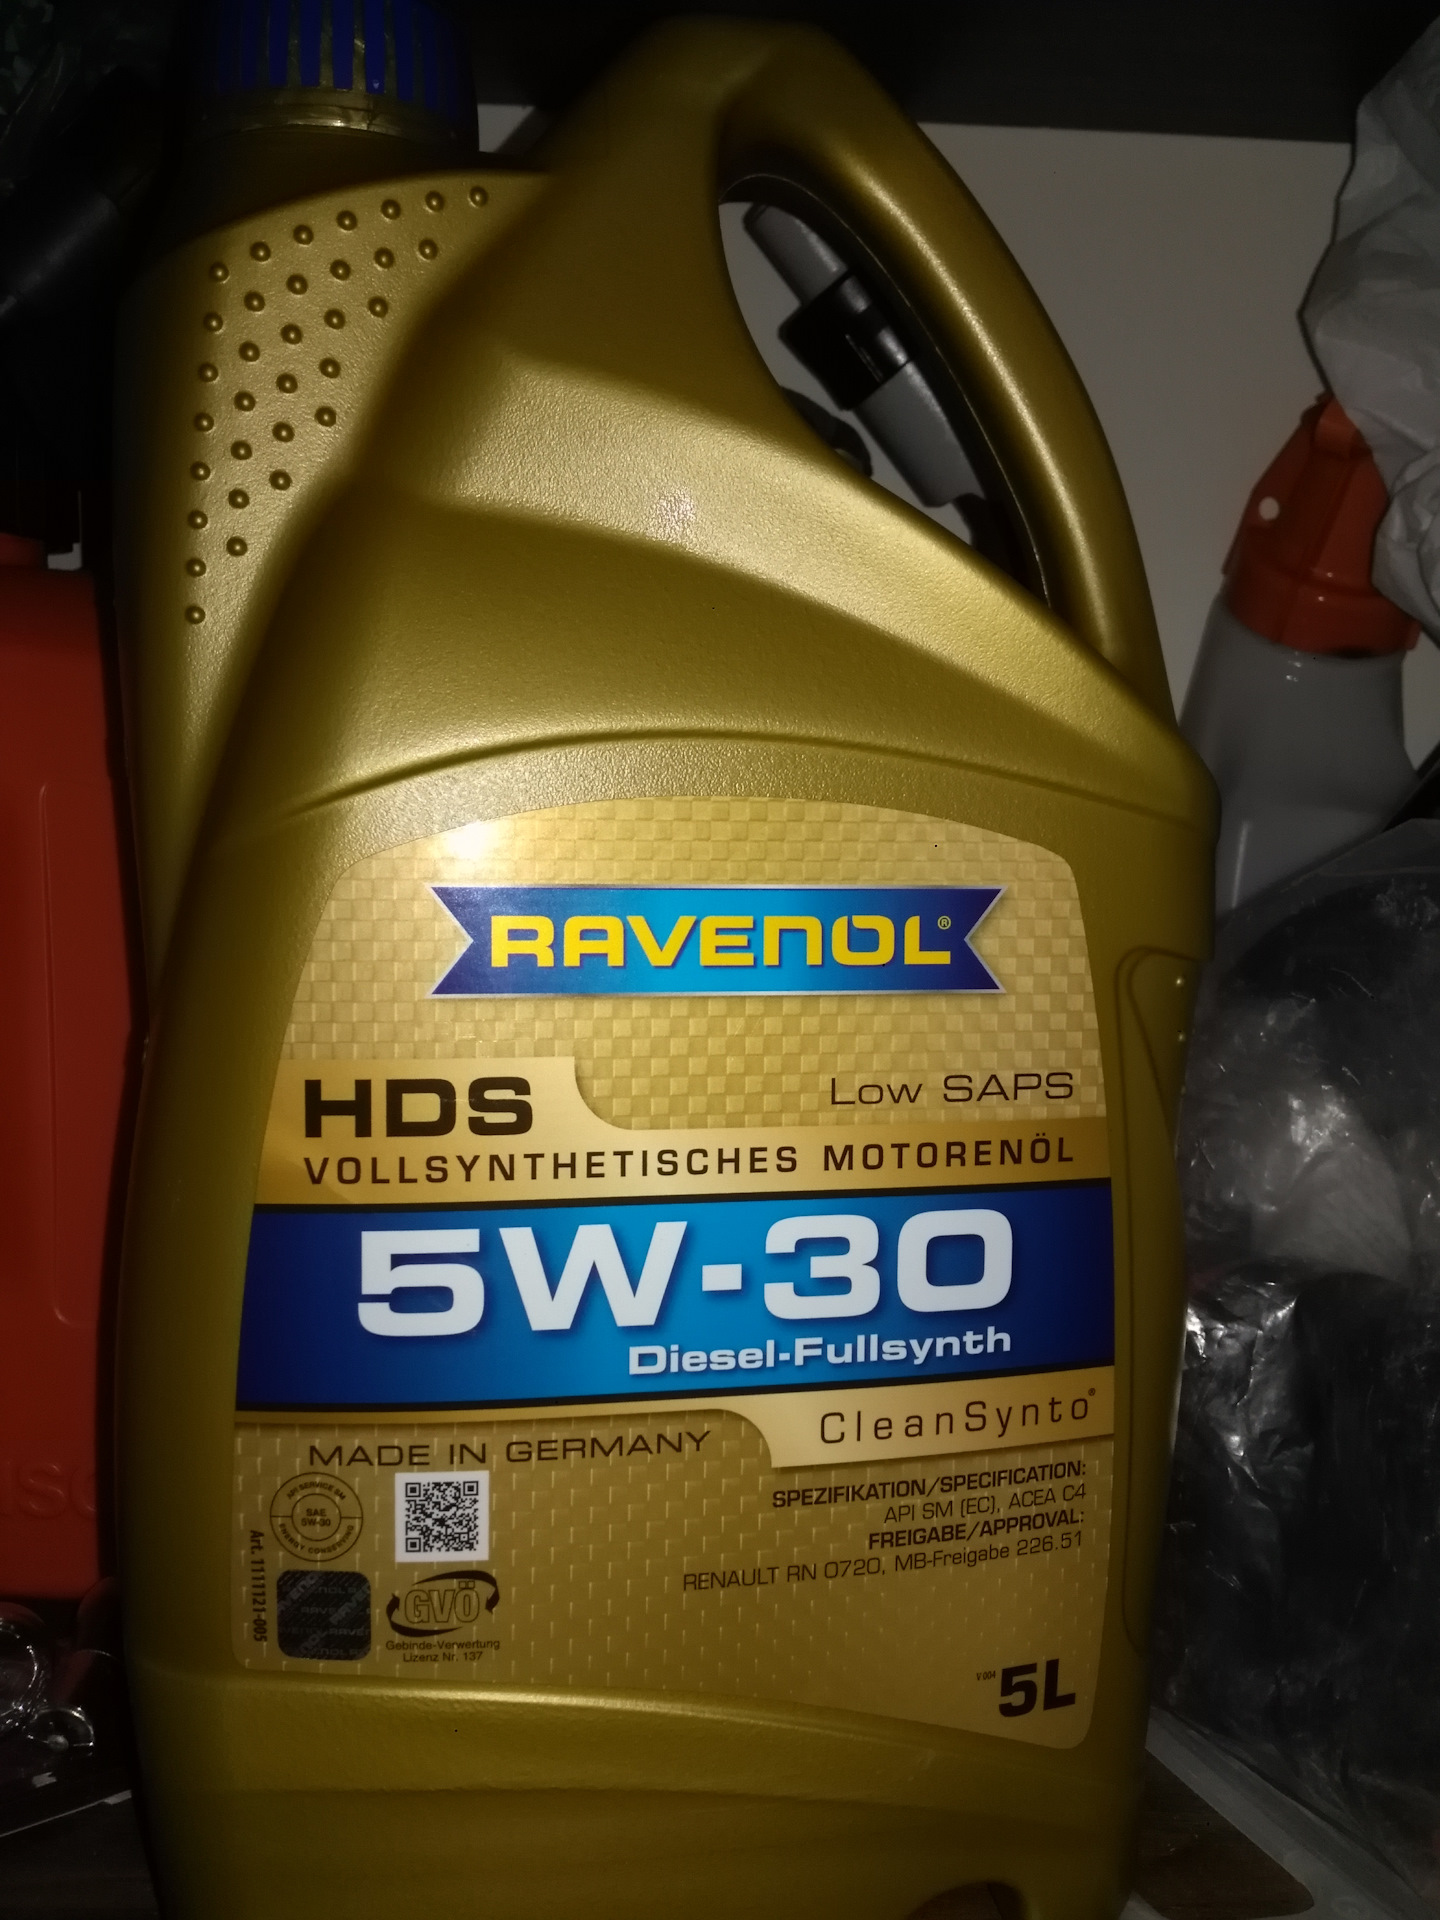 Мотор масло равенол. Ravenol 5w30. Моторное масло Равенол 5w30. 5w30 Ravenol Diesel. Равенол 5w30 HDS.